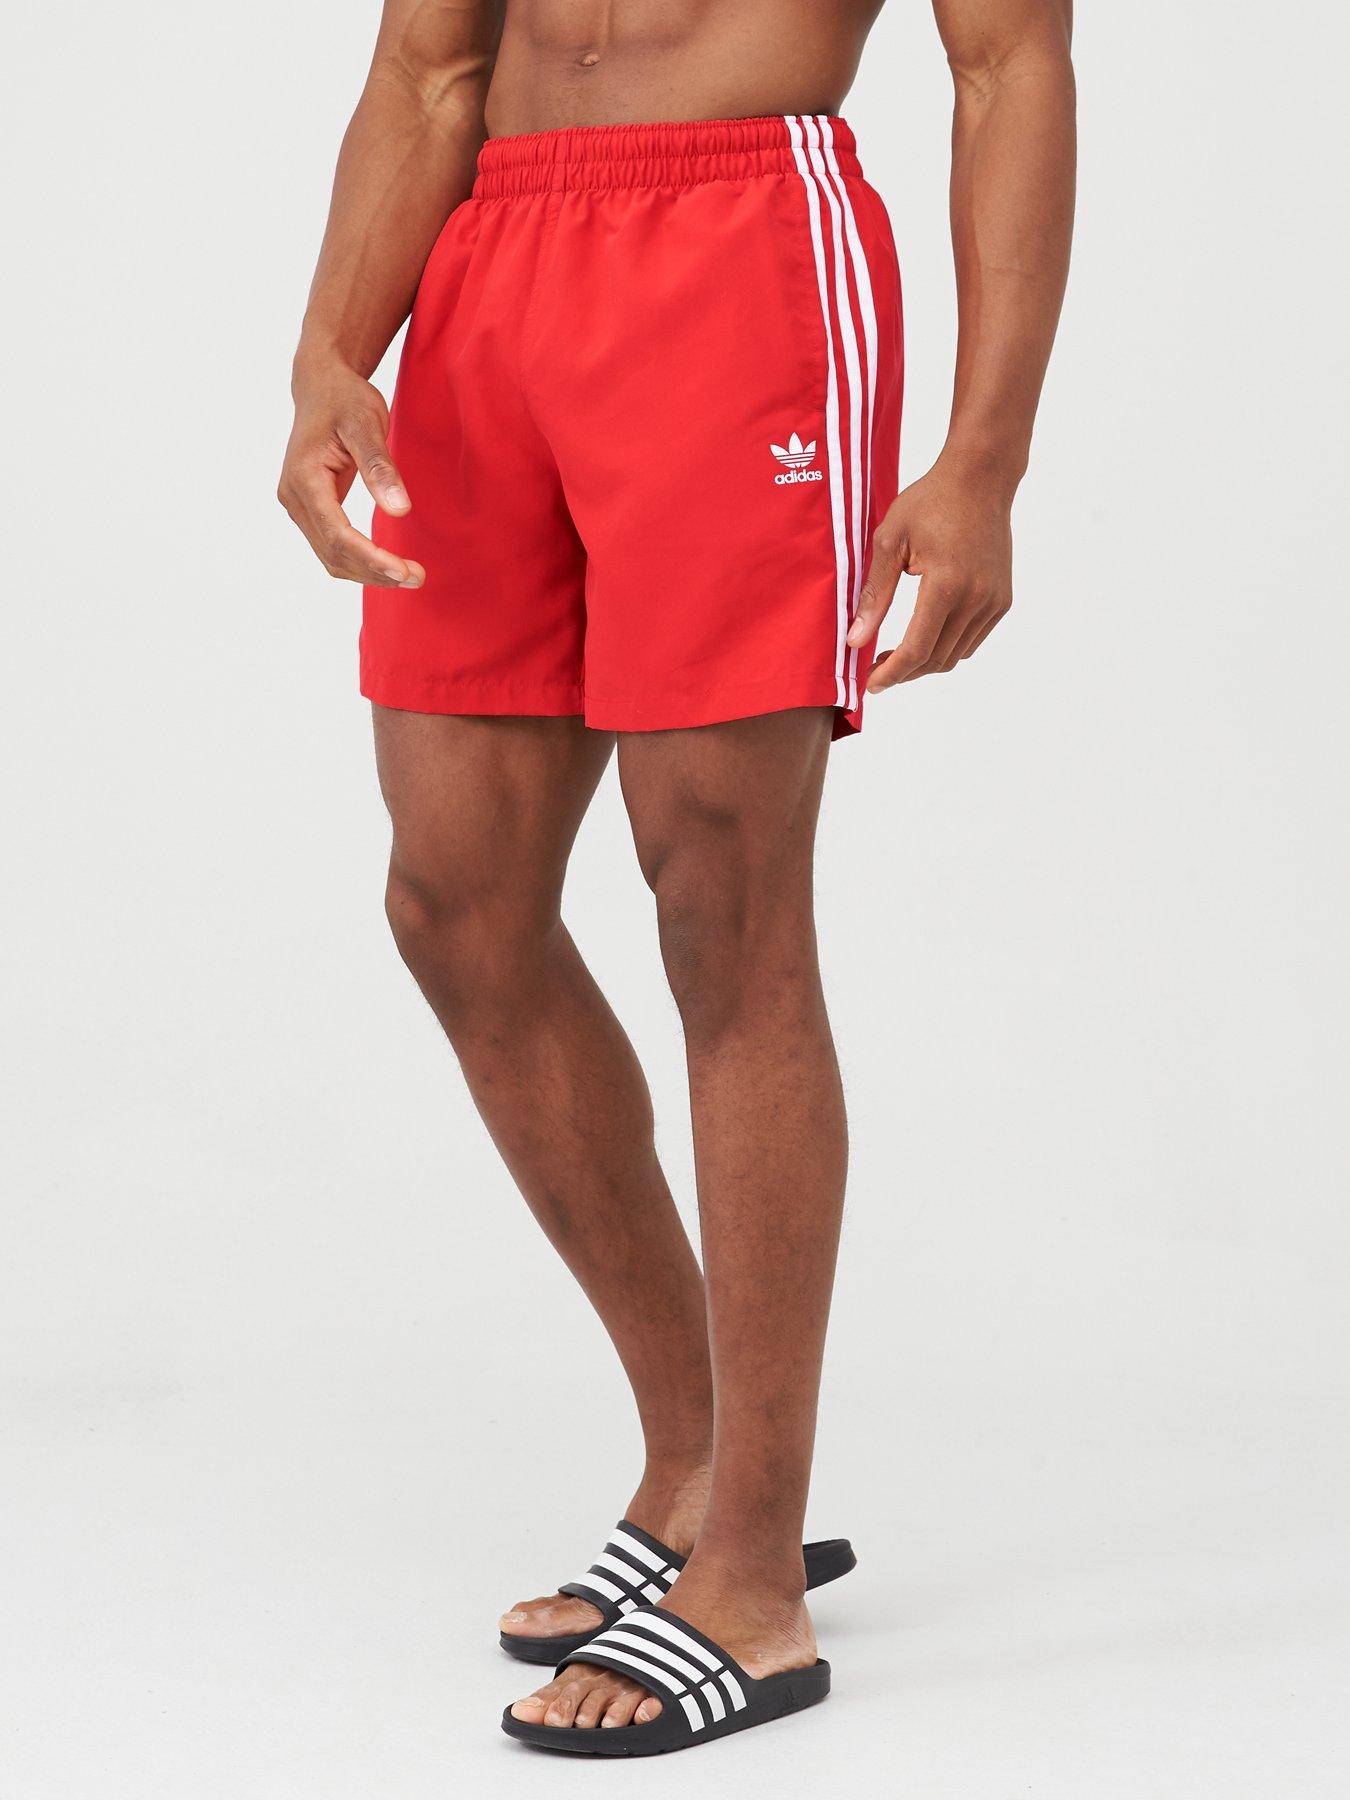 adidas 3 stripe shorts red